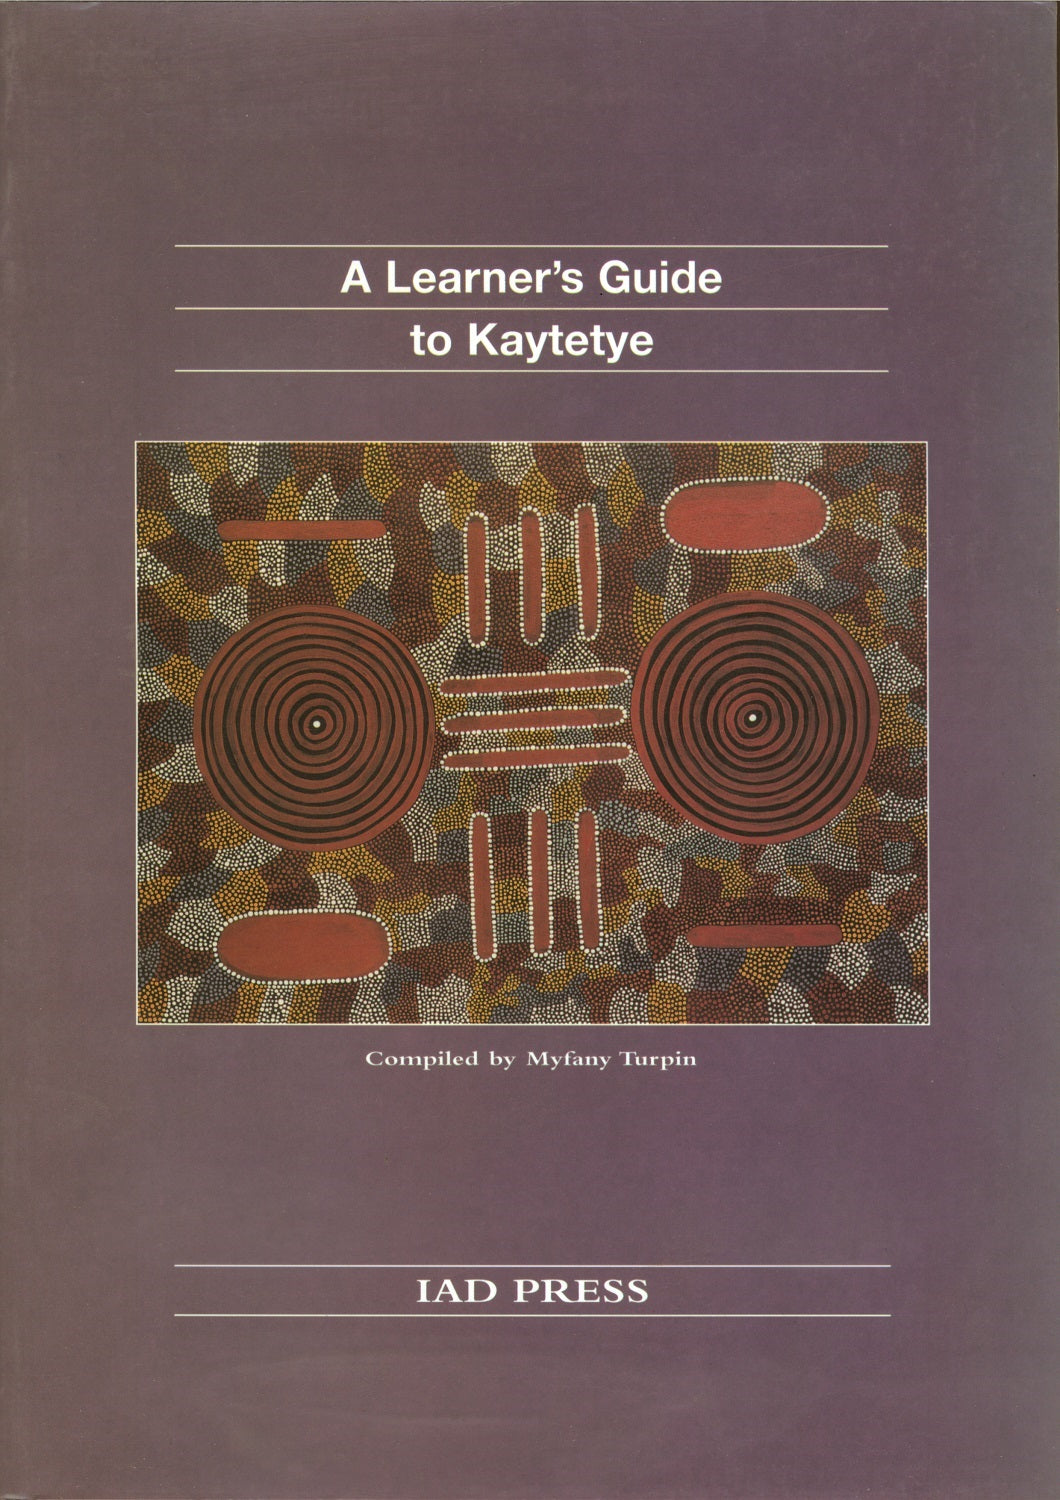 A Learner's Guide to Kaytetye | IAD Press | Australian Aboriginal Publisher & Book Shop